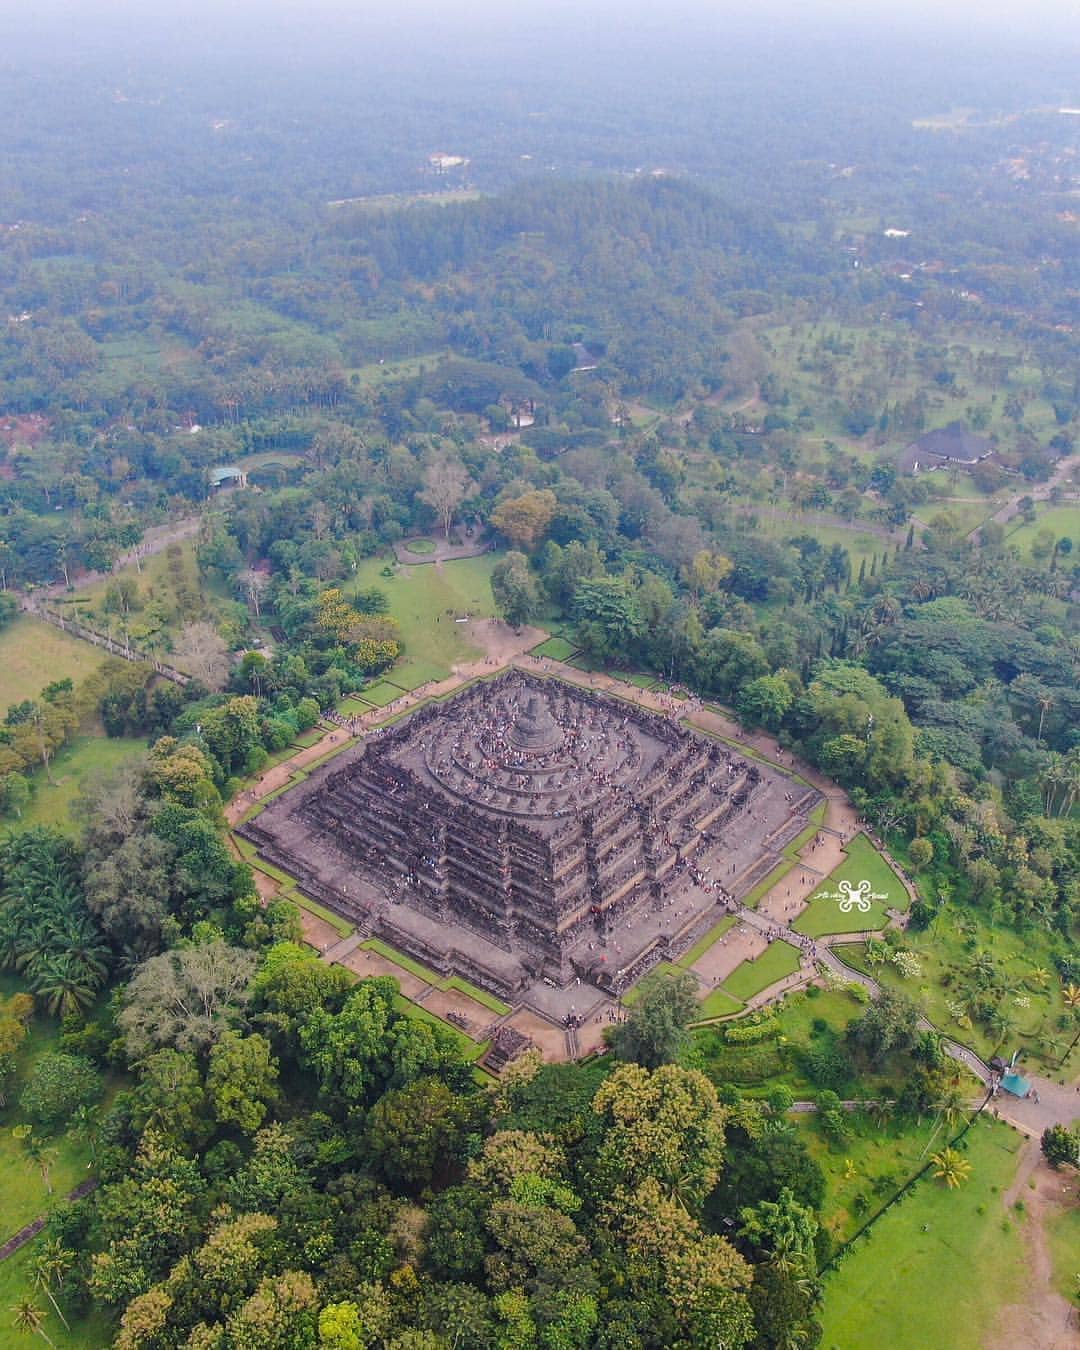 Harga Tiket Masuk Wisata Candi Borobudur Magelang Tahun ini - Wisata Mantap